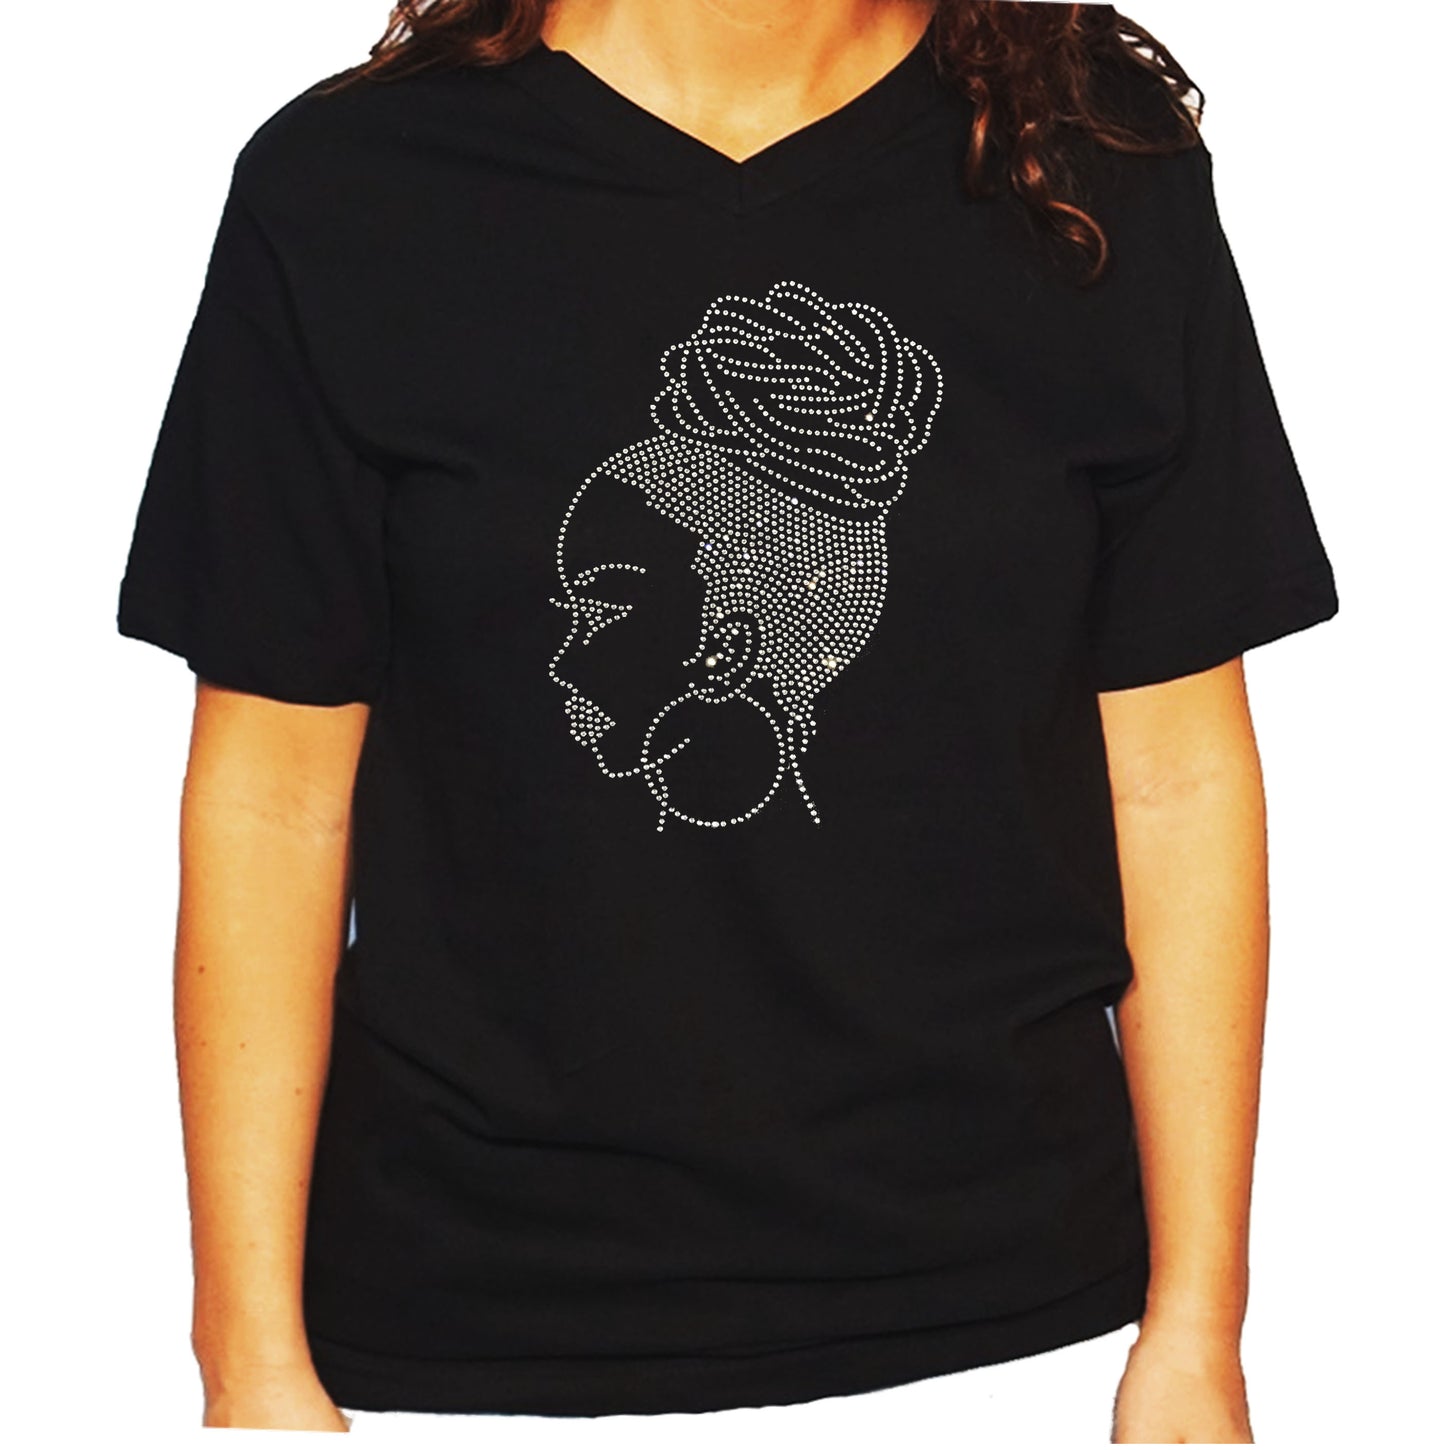 Women's / Unisex T-Shirt with Latina Woman in Rhinestones